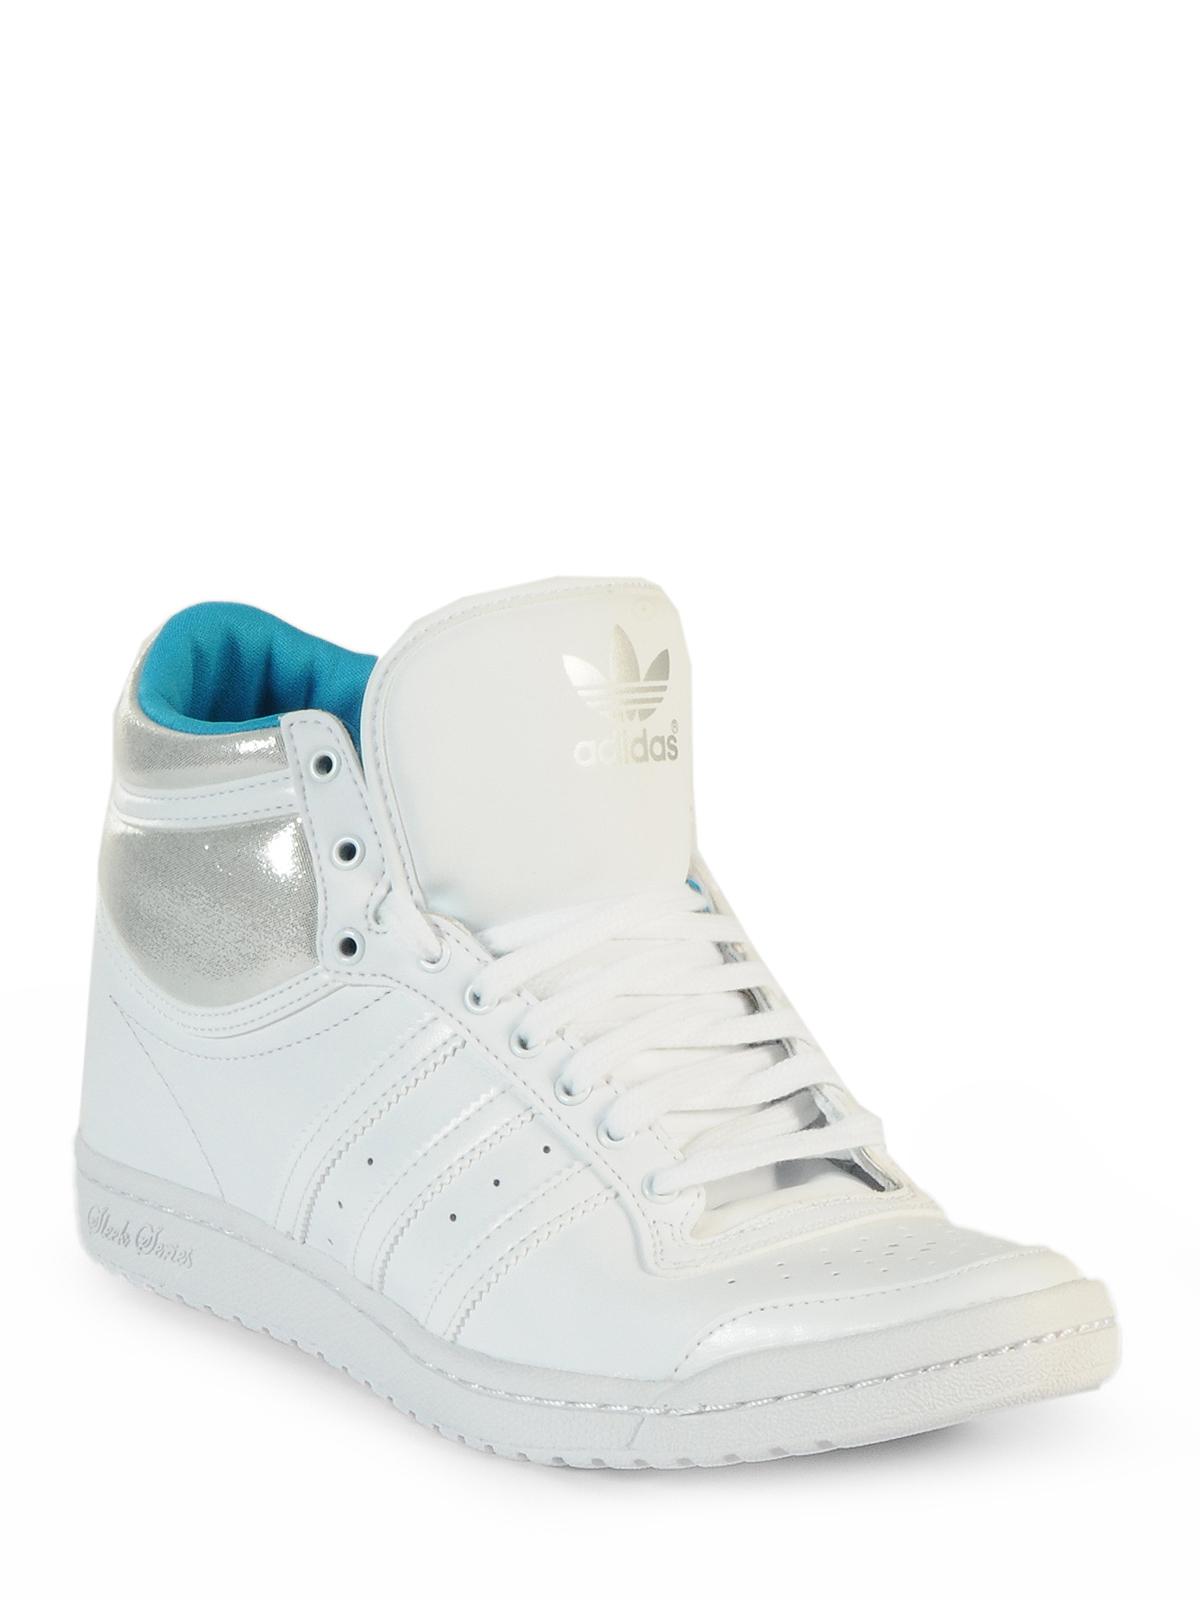 Foto Adidas Top Ten Hi Sleek Heel W blanco/ blanco/ turquesa EU: 37 foto 182501